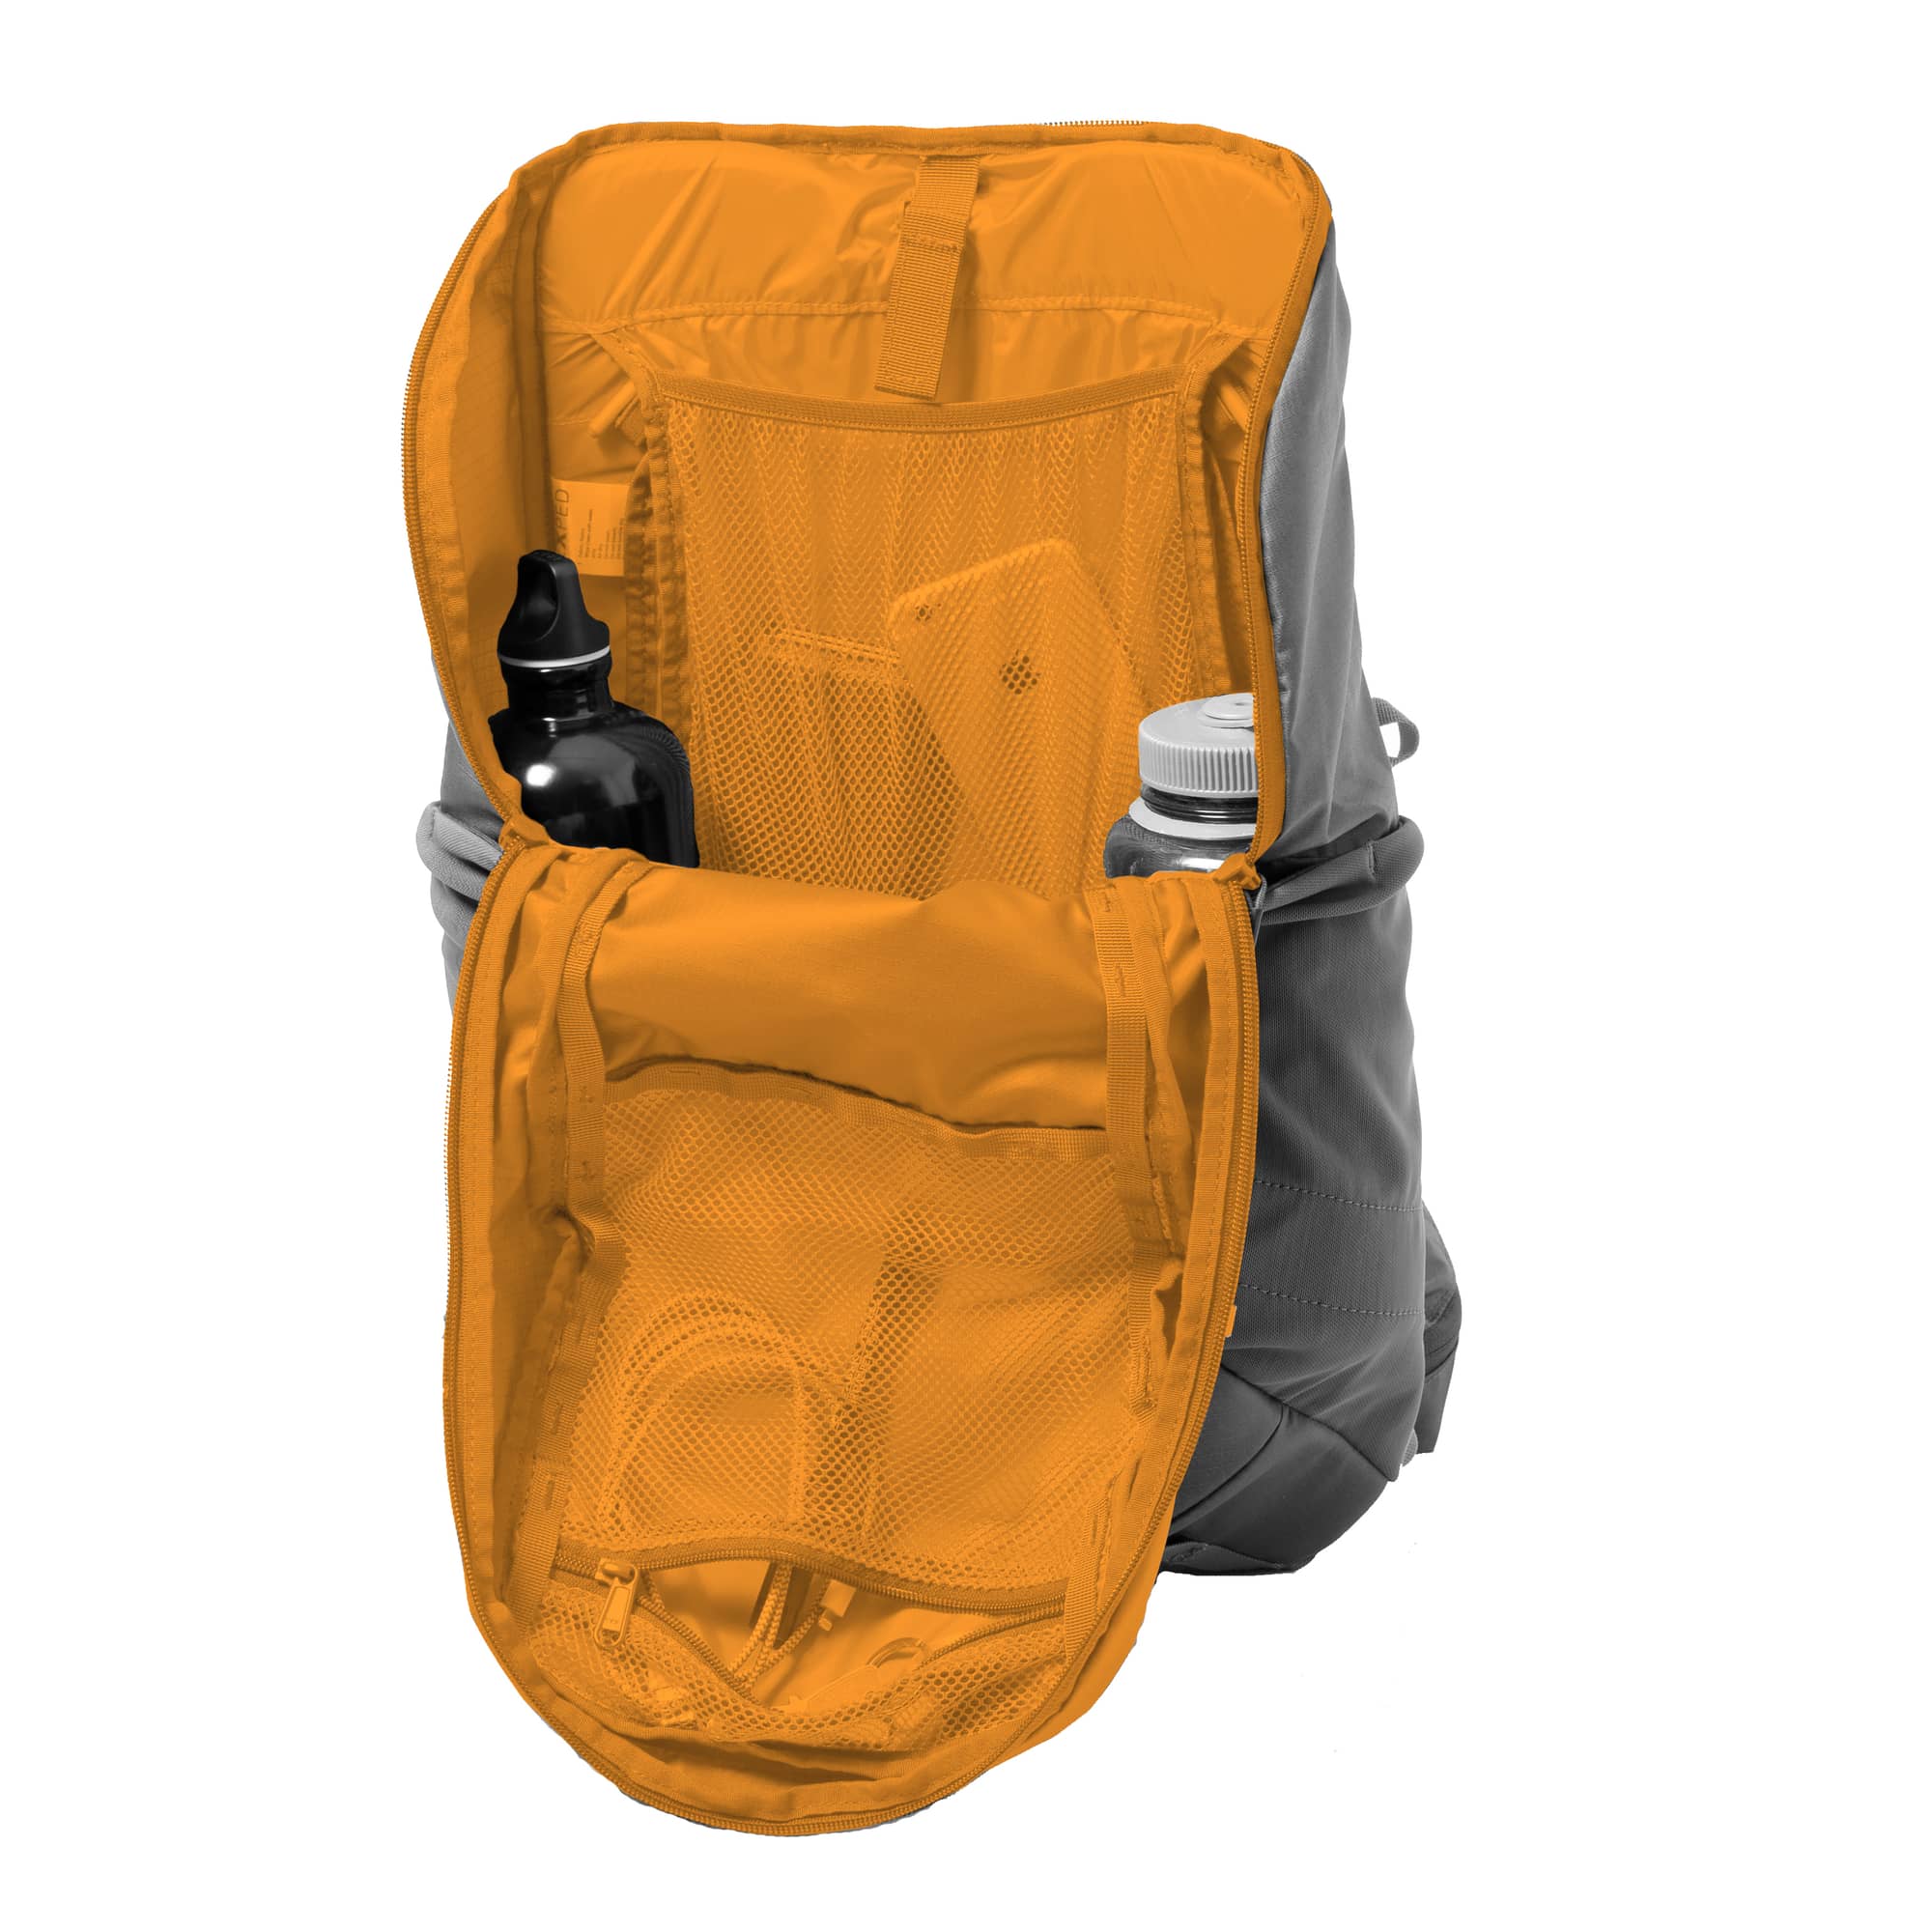 Timbuk2 Impulse Travel Backpack Duffel Review | Pack Hacker